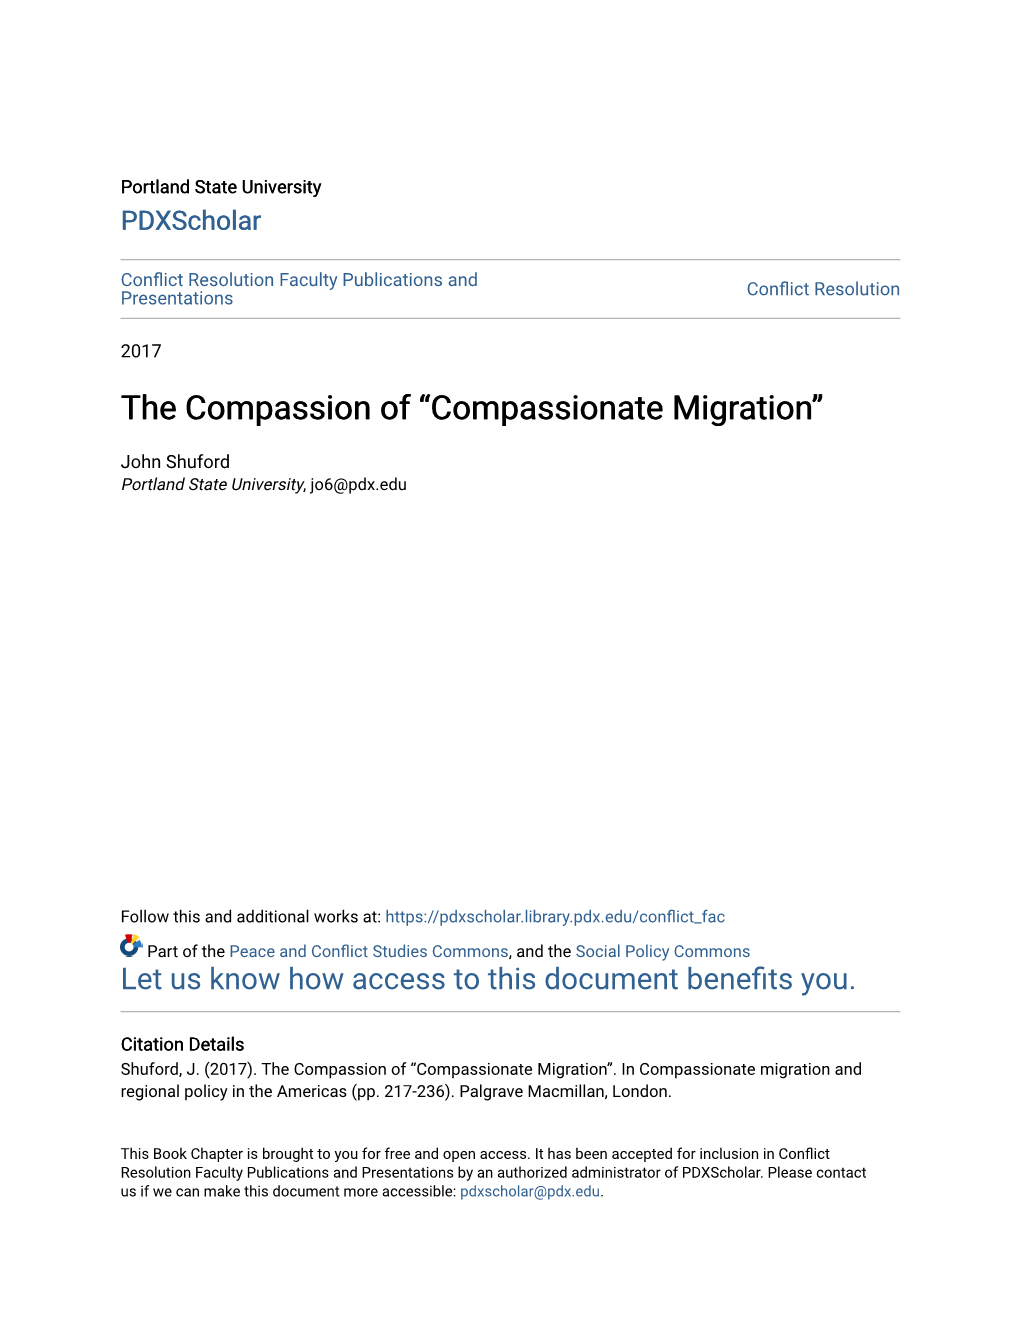 The Compassion of “Compassionate Migration”